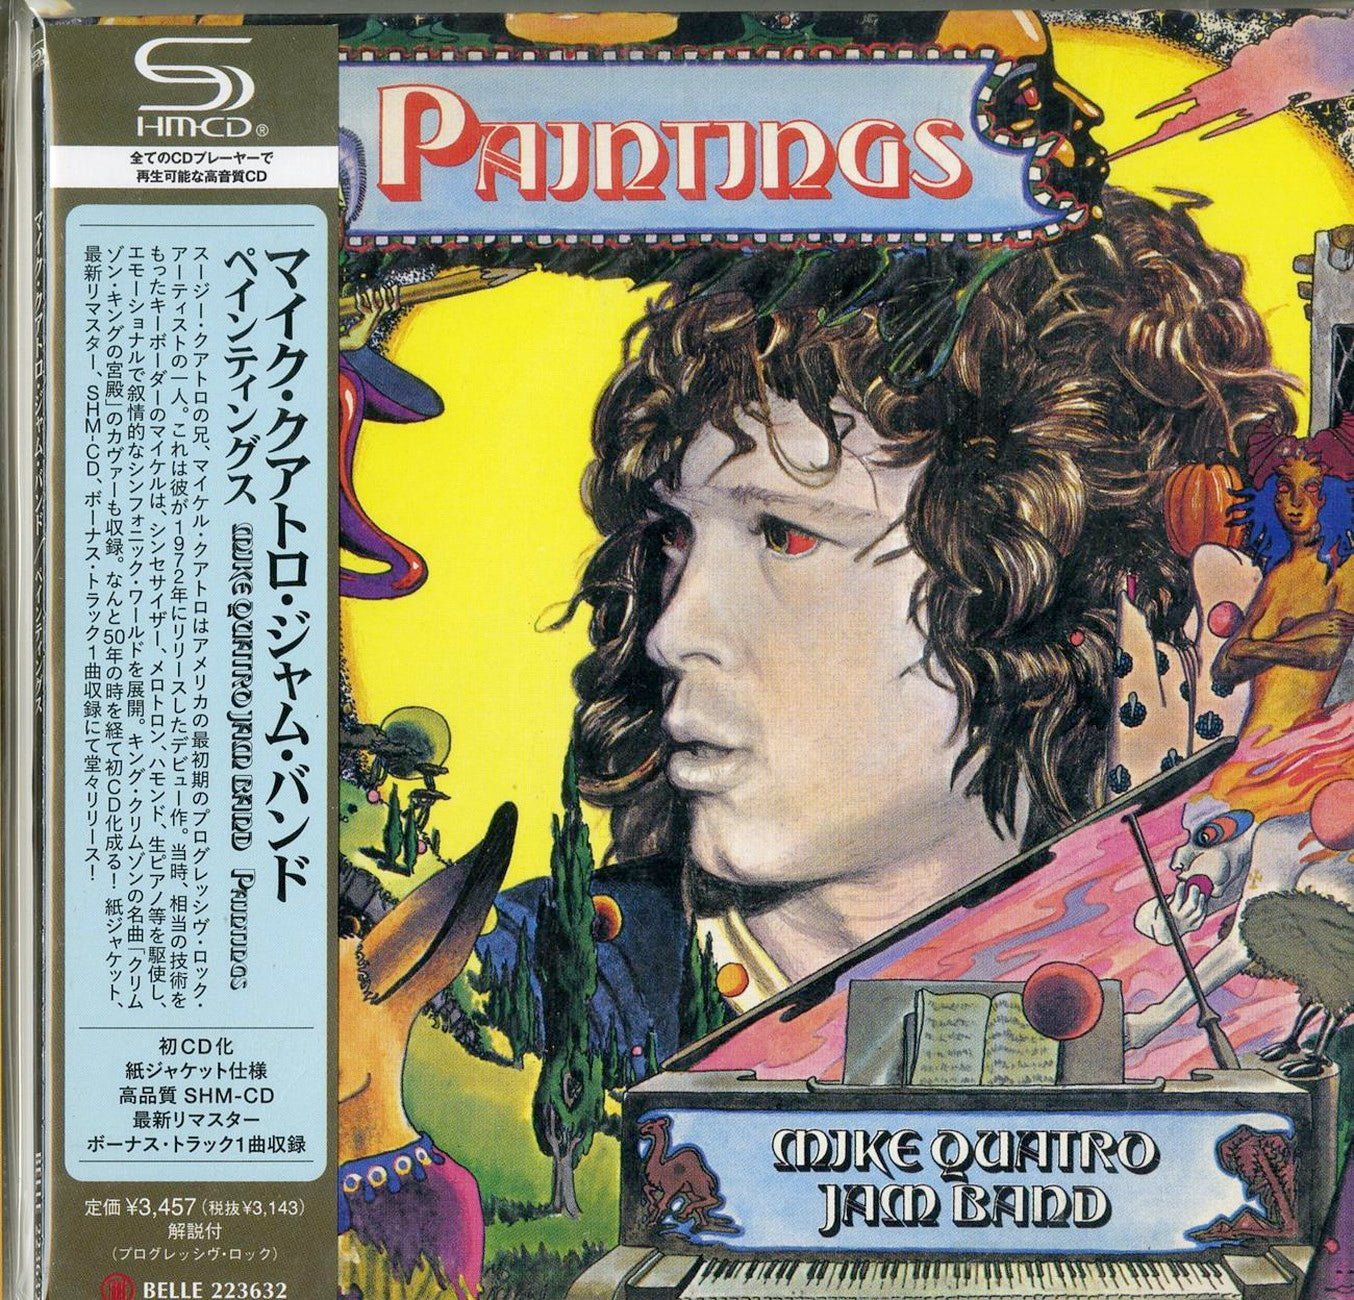 Mike Quatro Jam Band - Paintings - Japan Mini LP SHM-CD Bonus